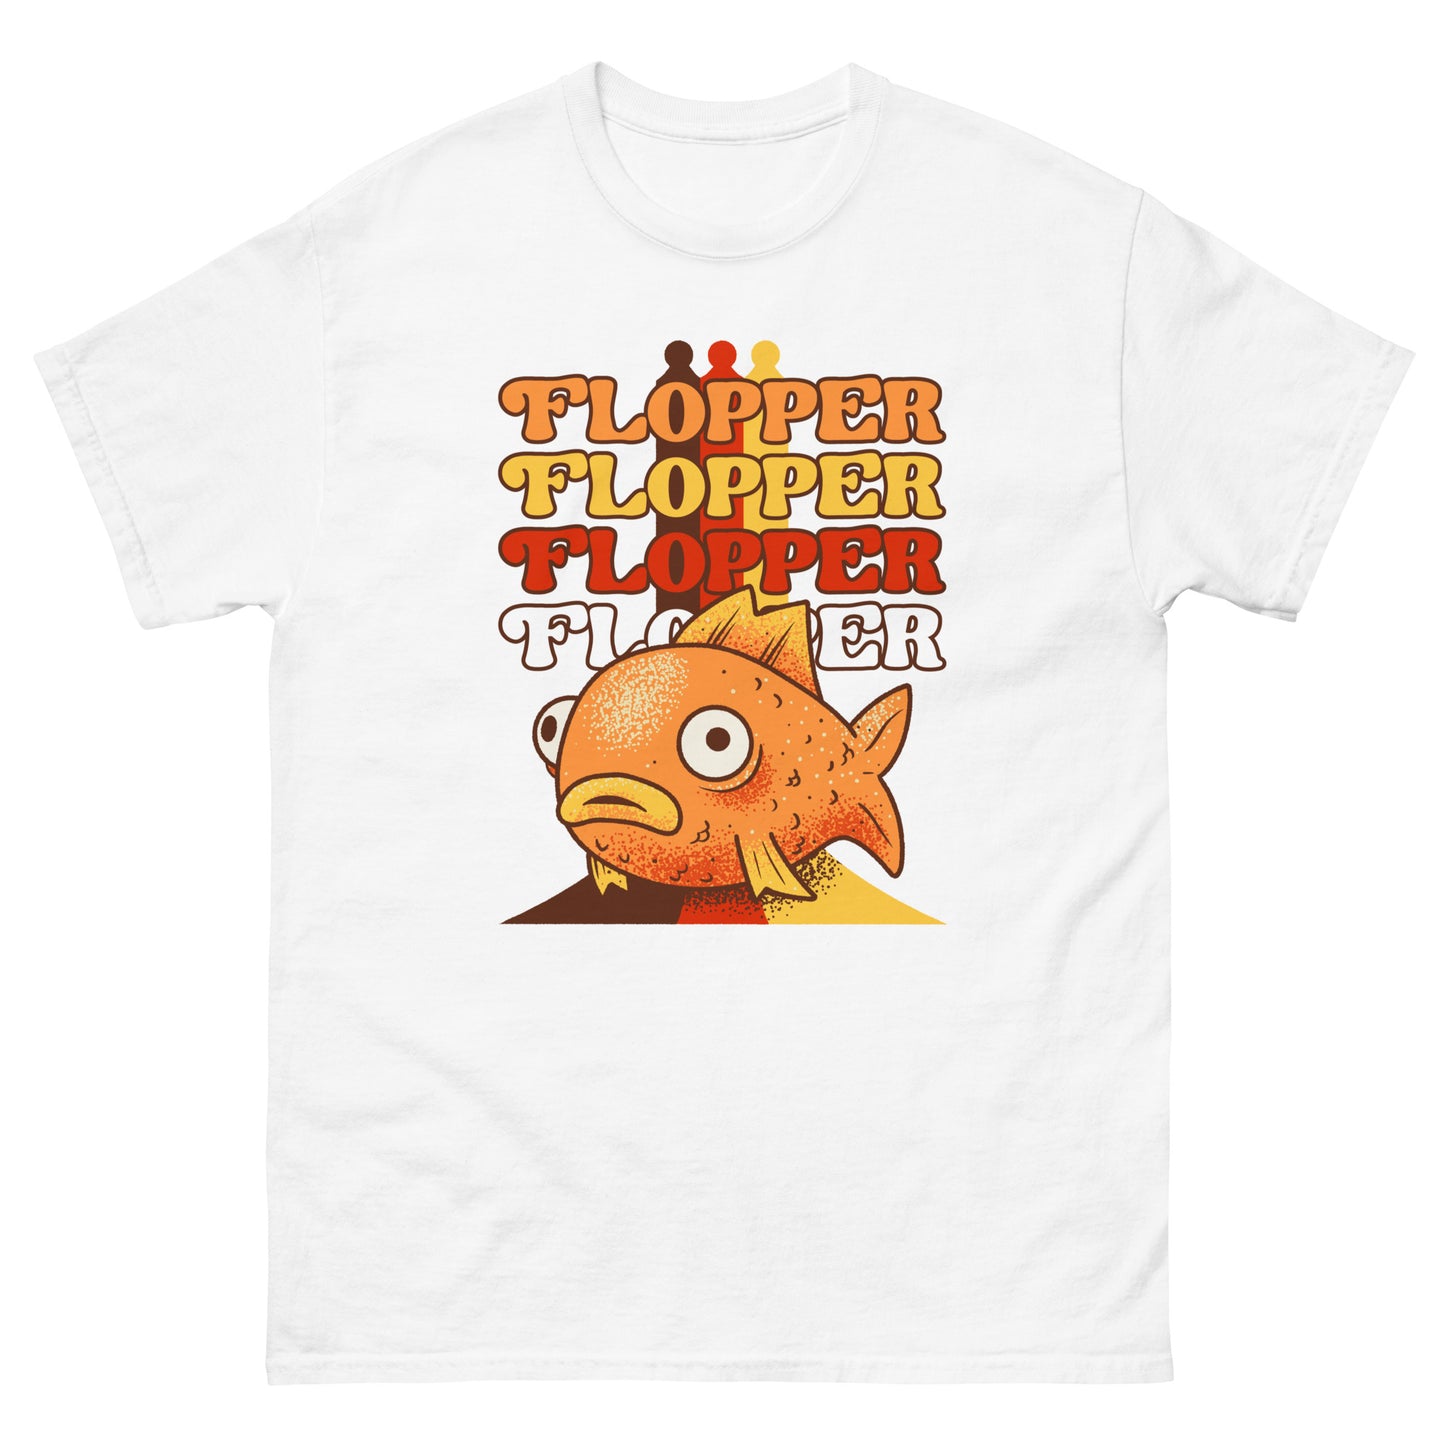 Flopper Flopper Flopper Flopper Funny Pop Culture Whopper and Fortnite T-Shirt